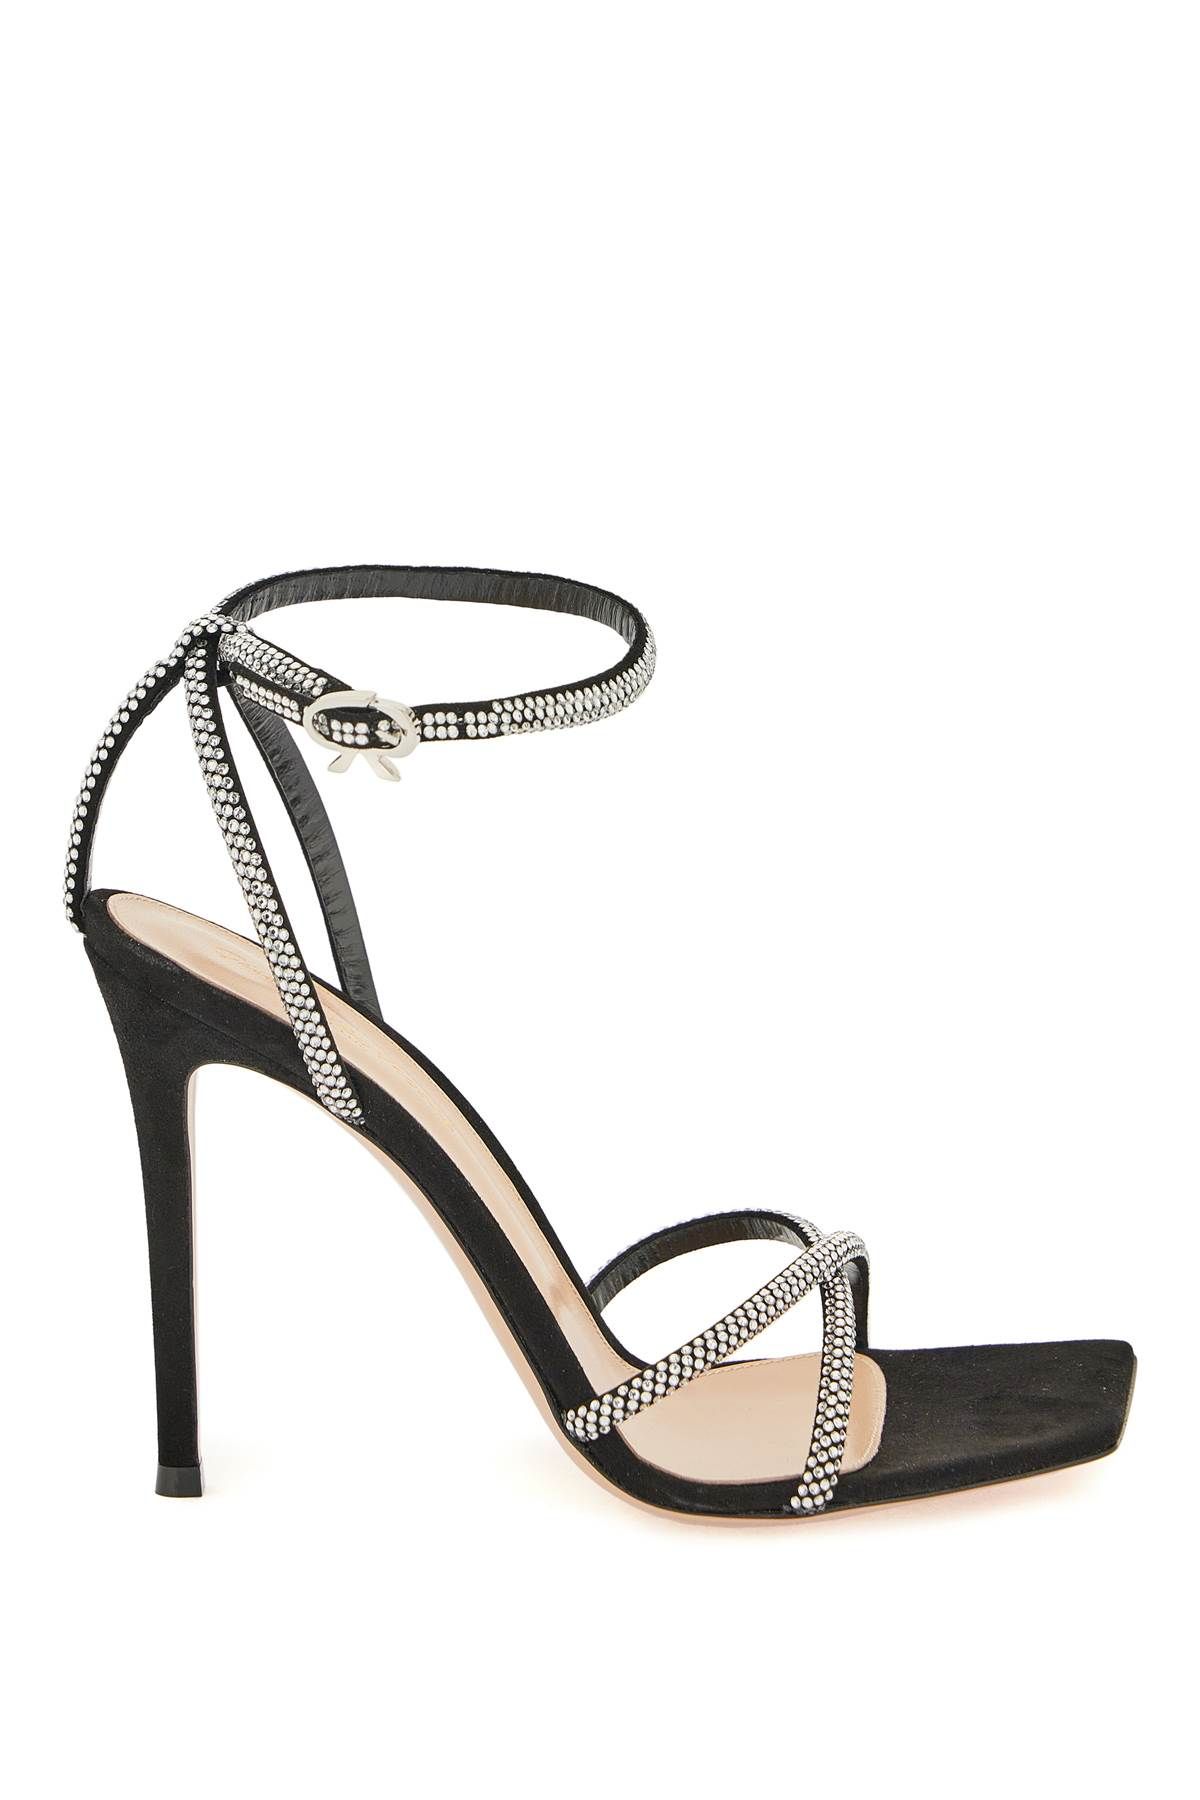 Shop Gianvito Rossi Suede Sandals With Rhinestones In Black,silver